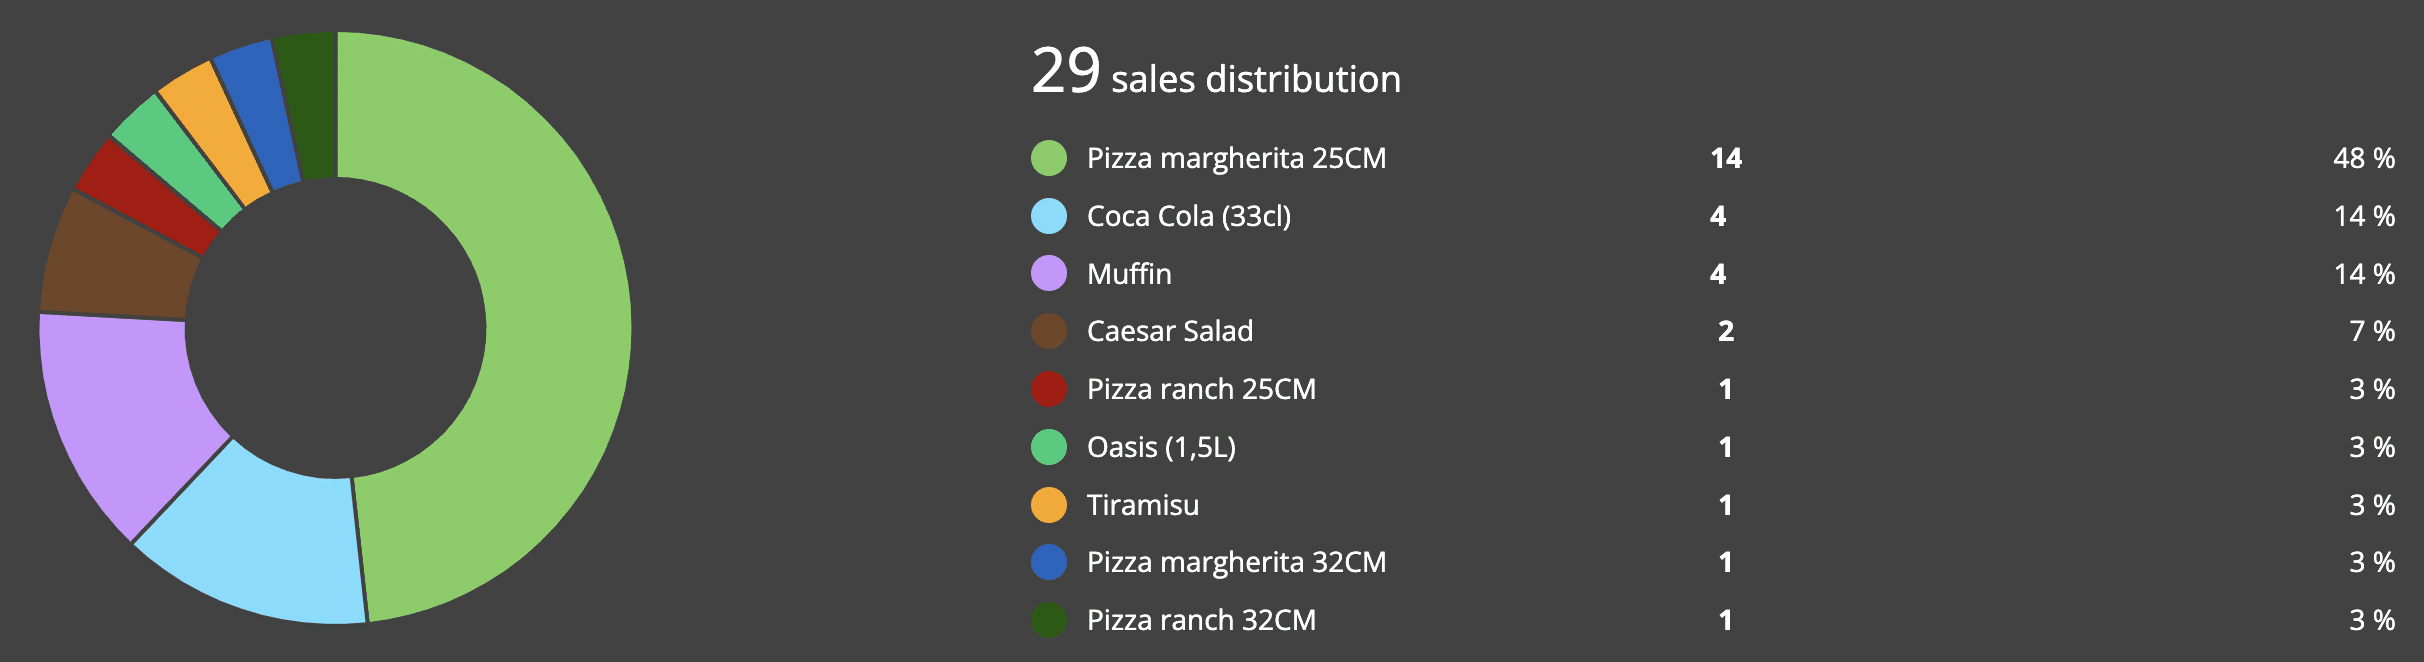 sales distrib